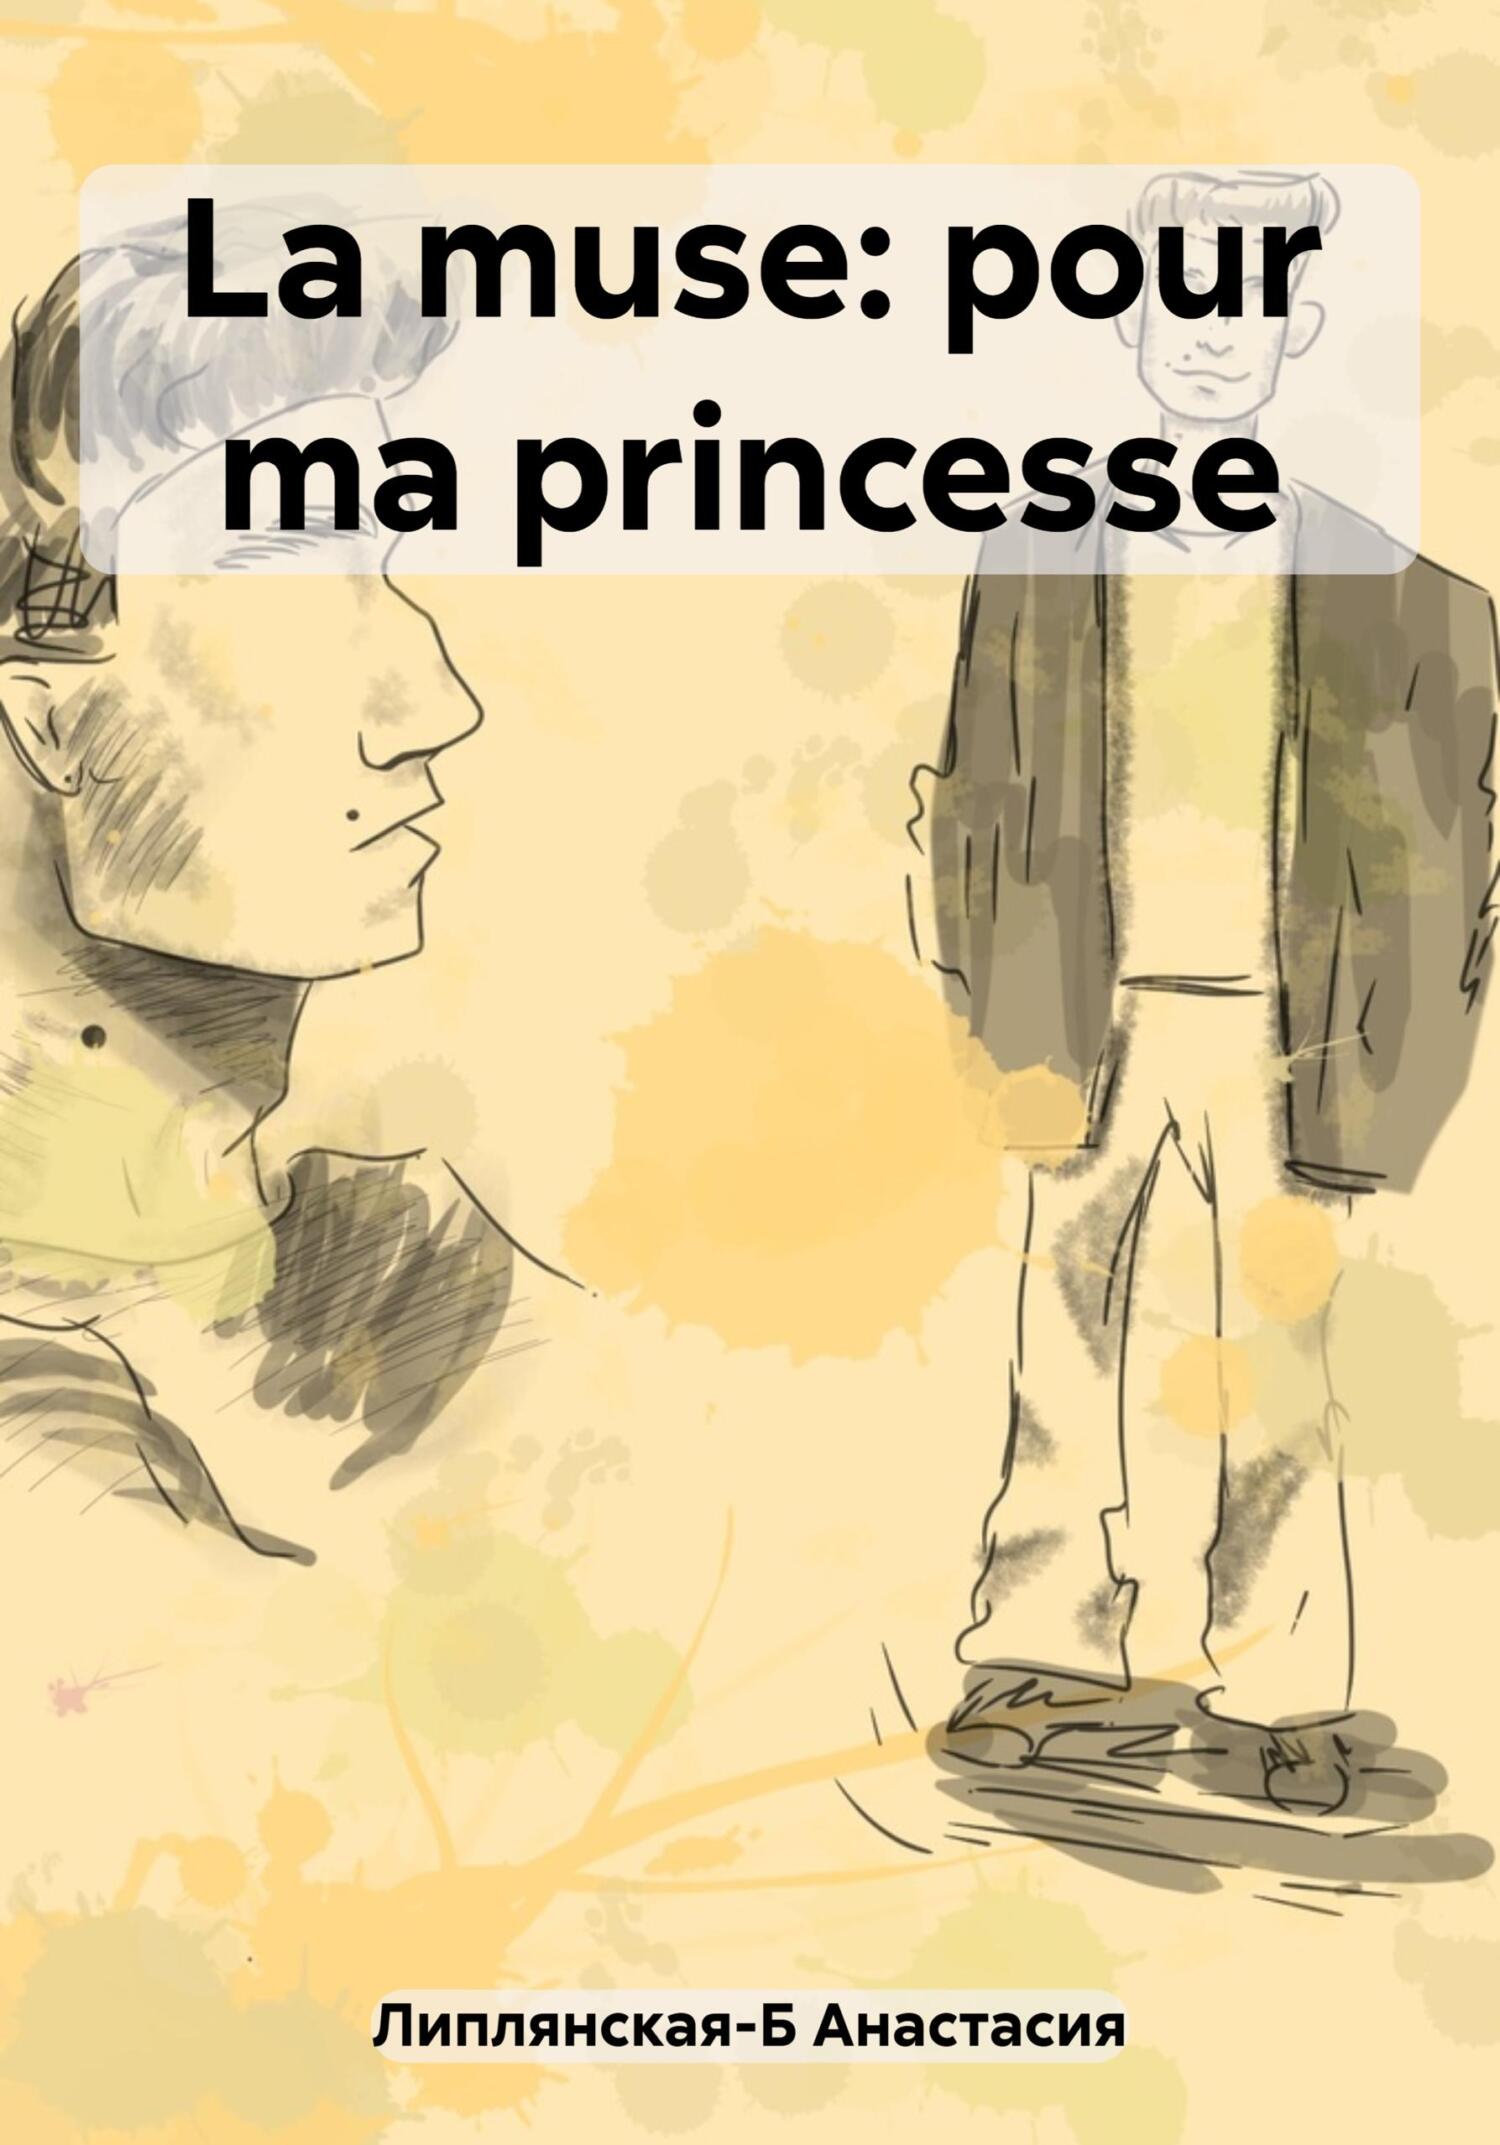 La muse: pour ma princesse - Анастасия Владиславовна Липлянская-Б